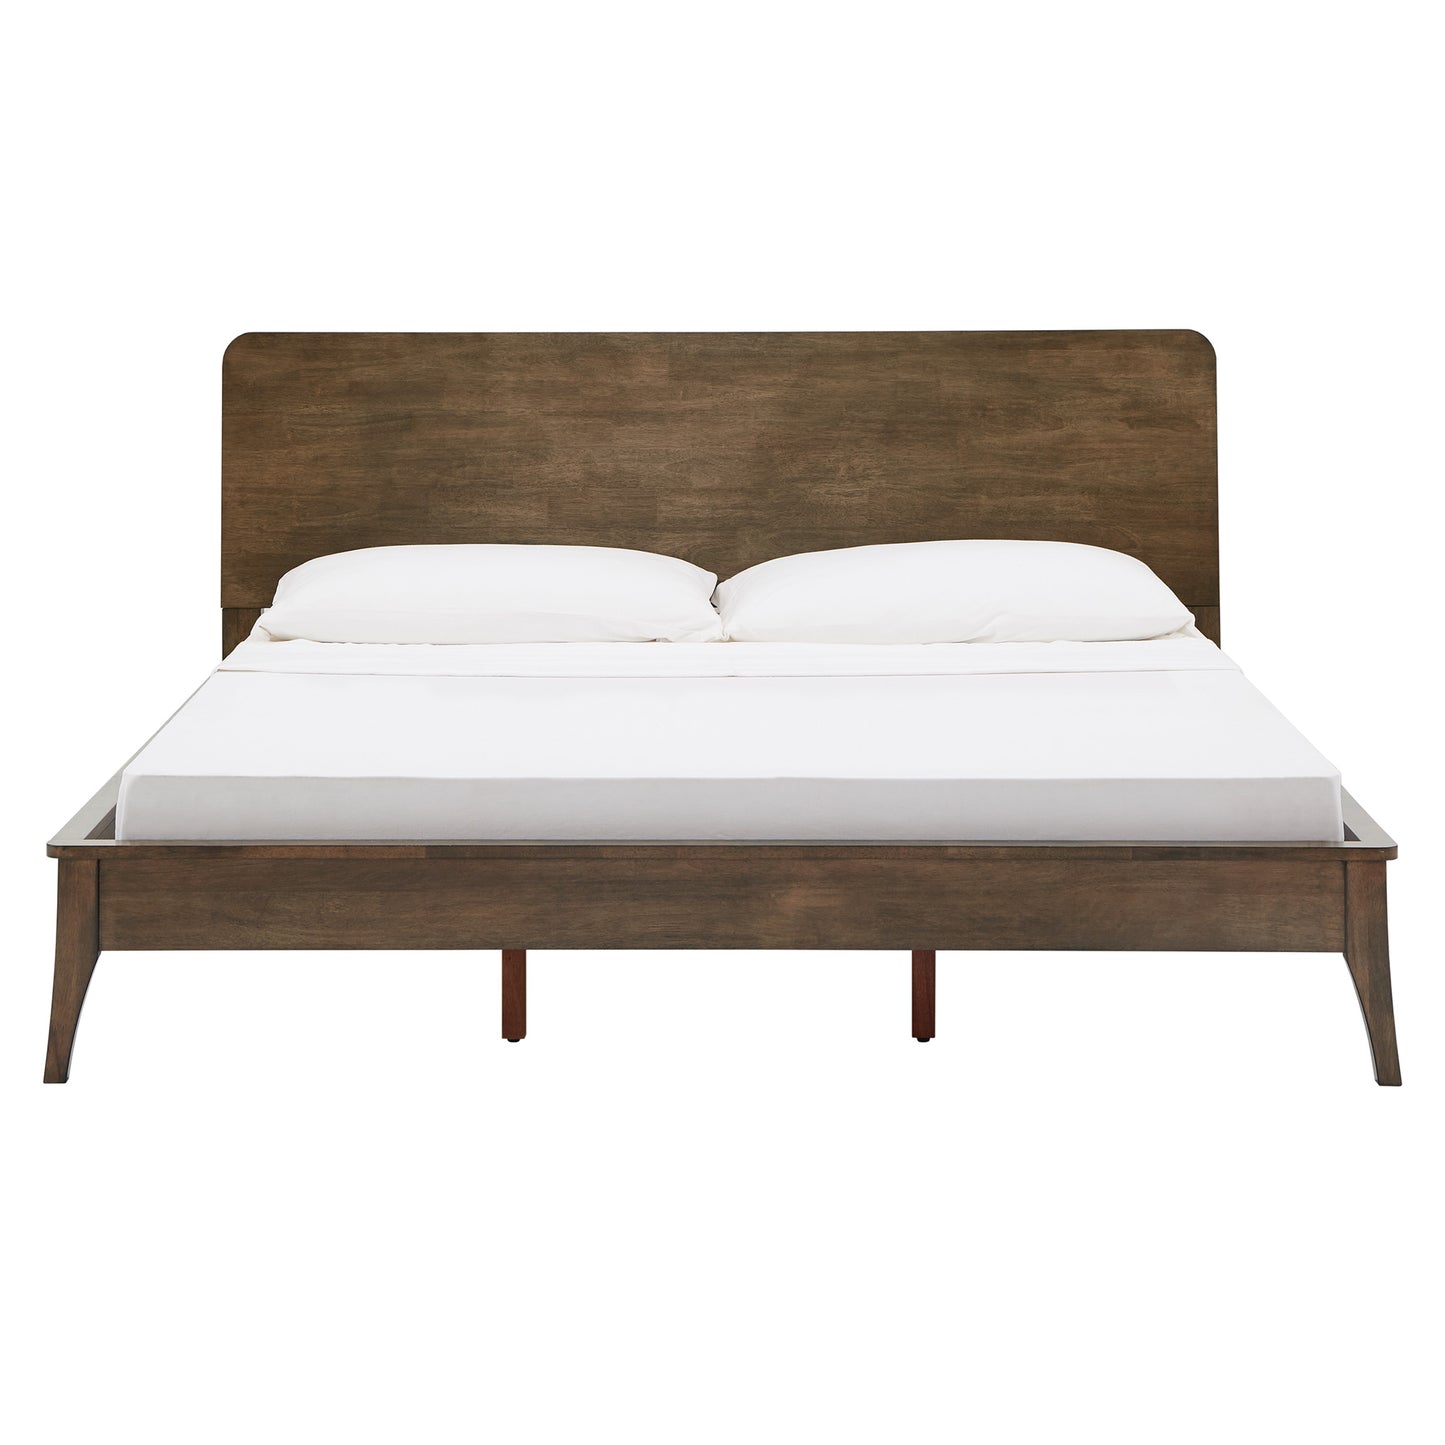 Wood Platform Bed - Walnut Finish, King Size